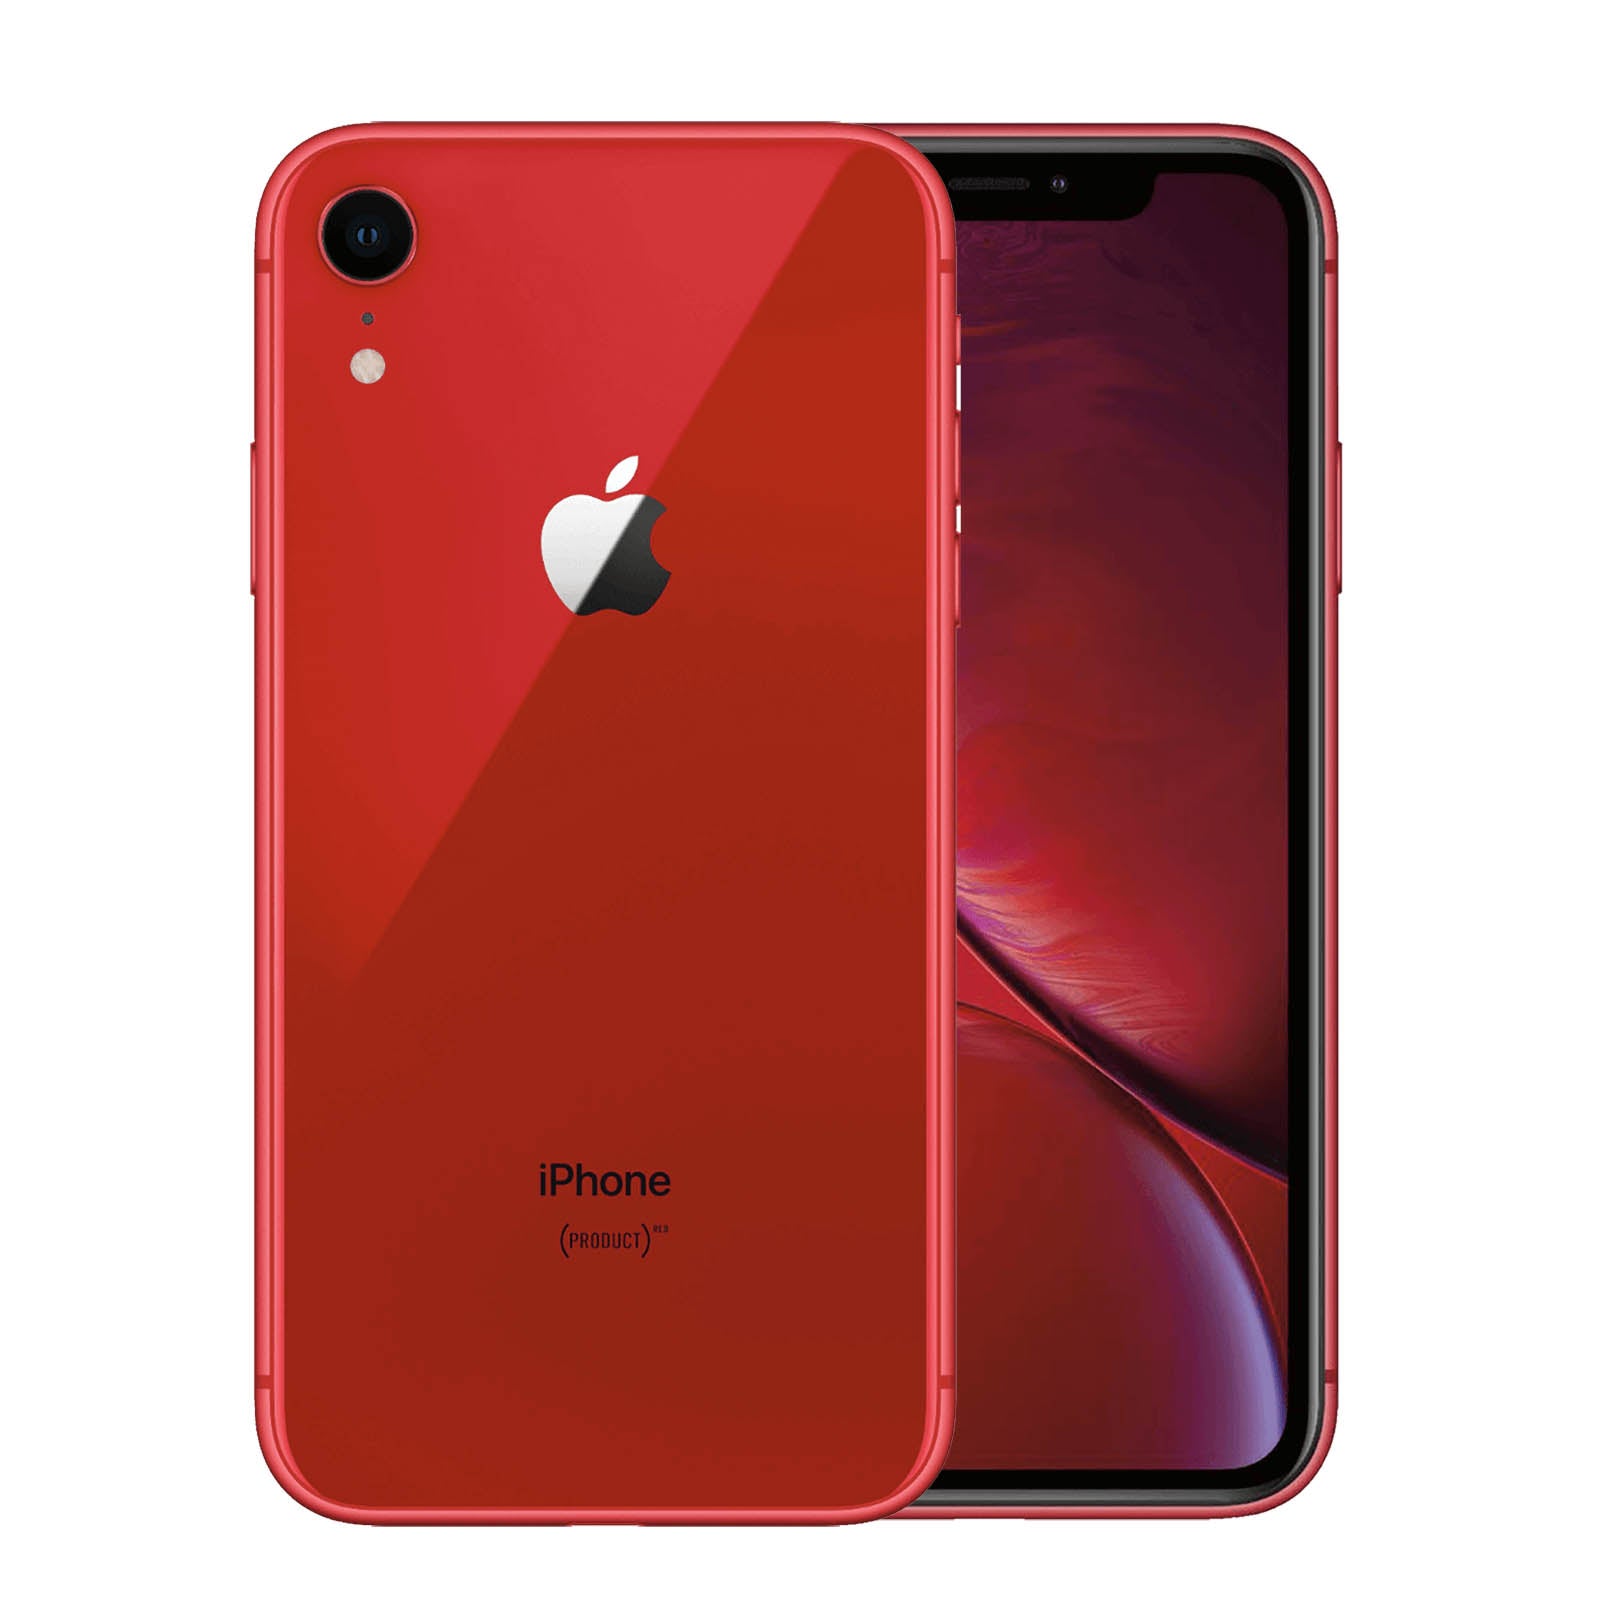 Apple iPhone XR 256GB Product Red Fair - Unlocked